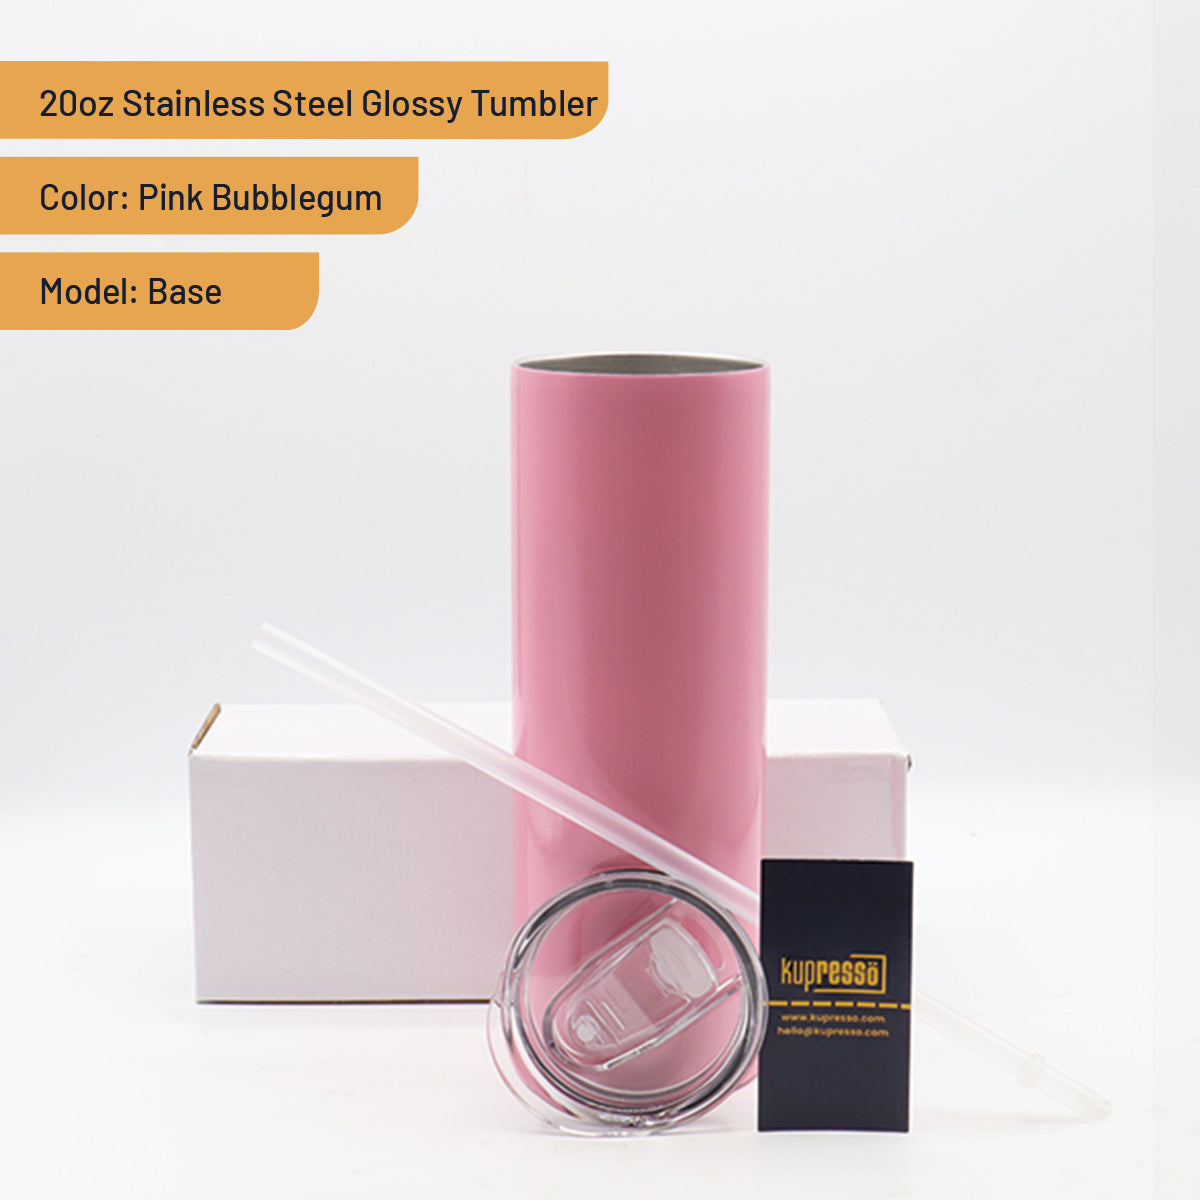 20oz Stainless Steel Glossy Tumbler 20oz Stainless Steel Tumblers Kupresso Base (White Gift Box) Bubblegum Pink 